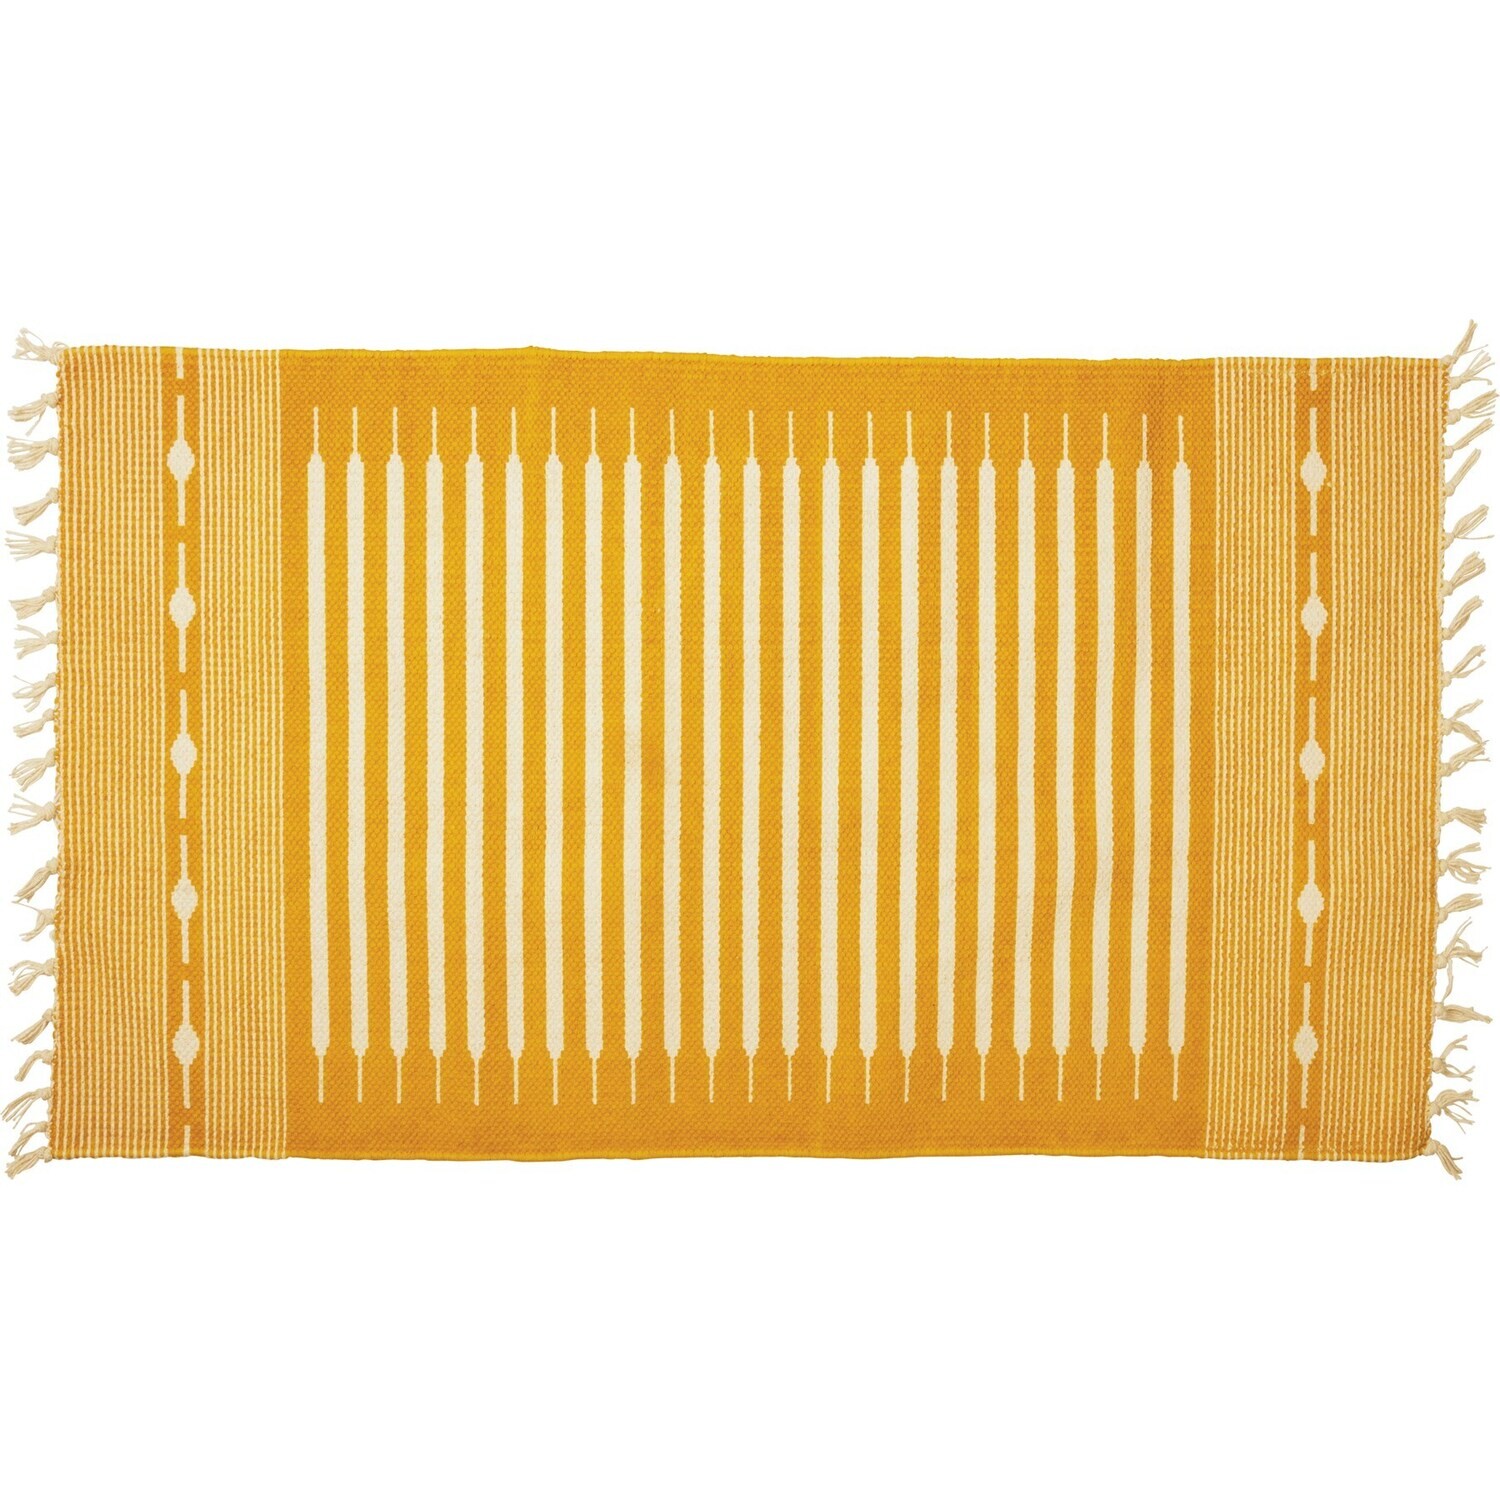 Rug - Saffron Stripes